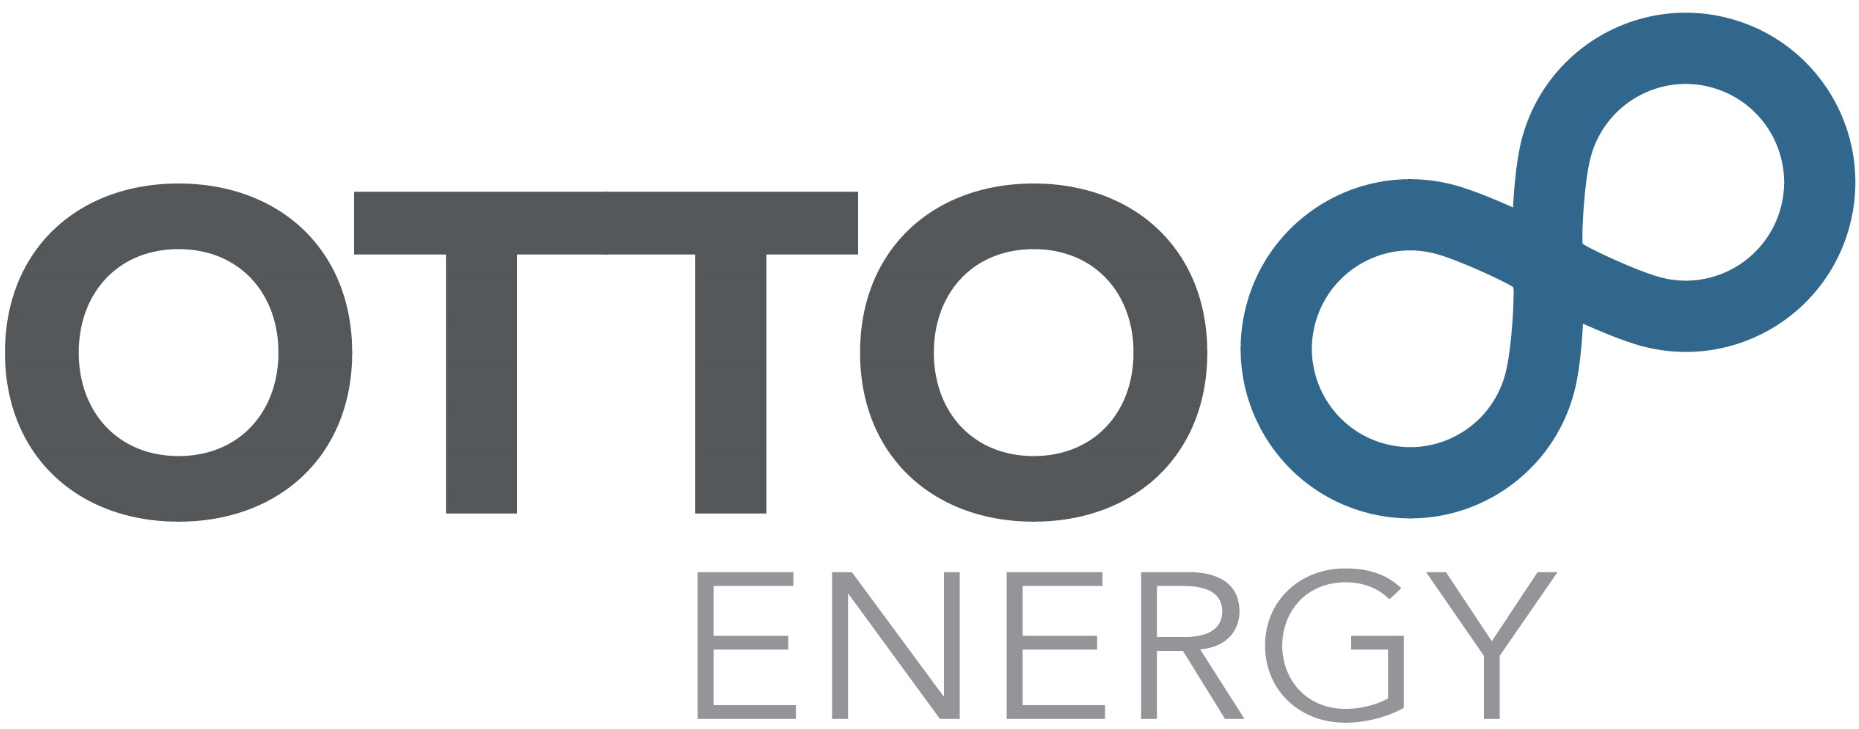 Otto Energy Limited Logo